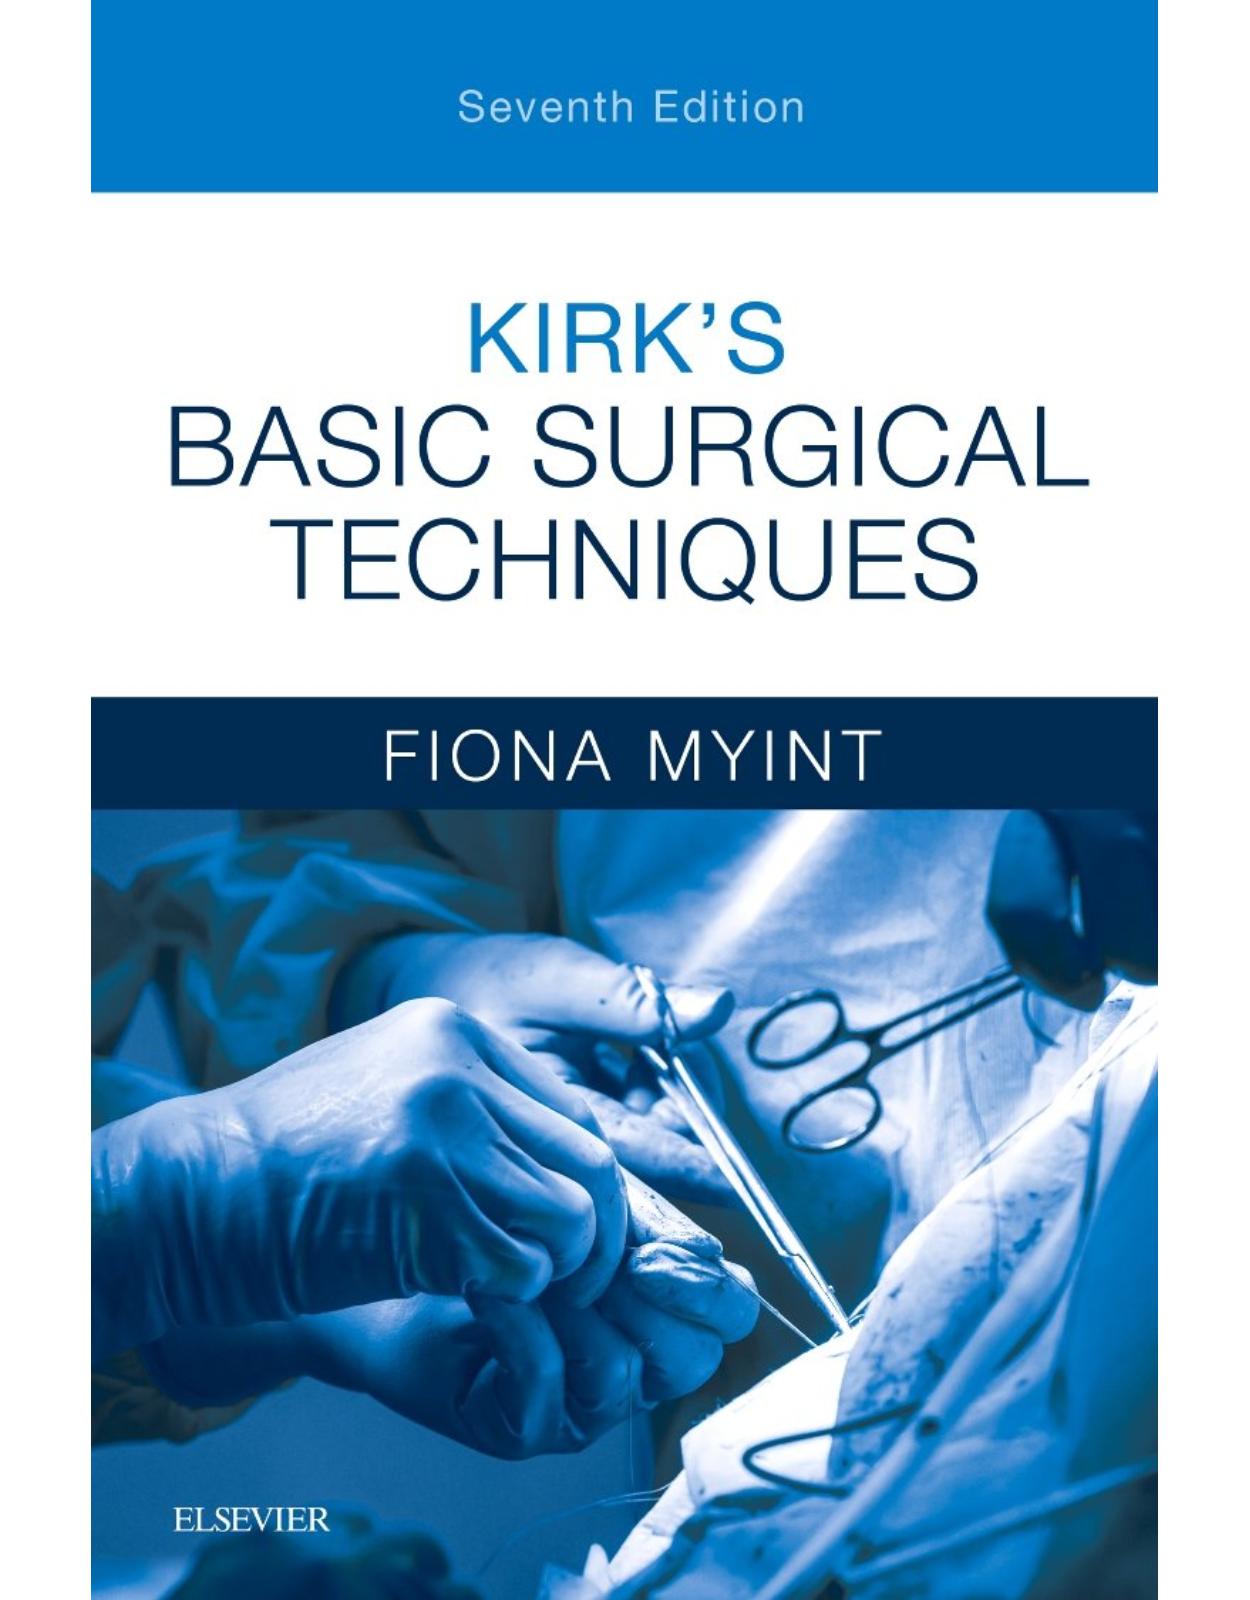 Kirk’s Basic Surgical Techniques, 7e